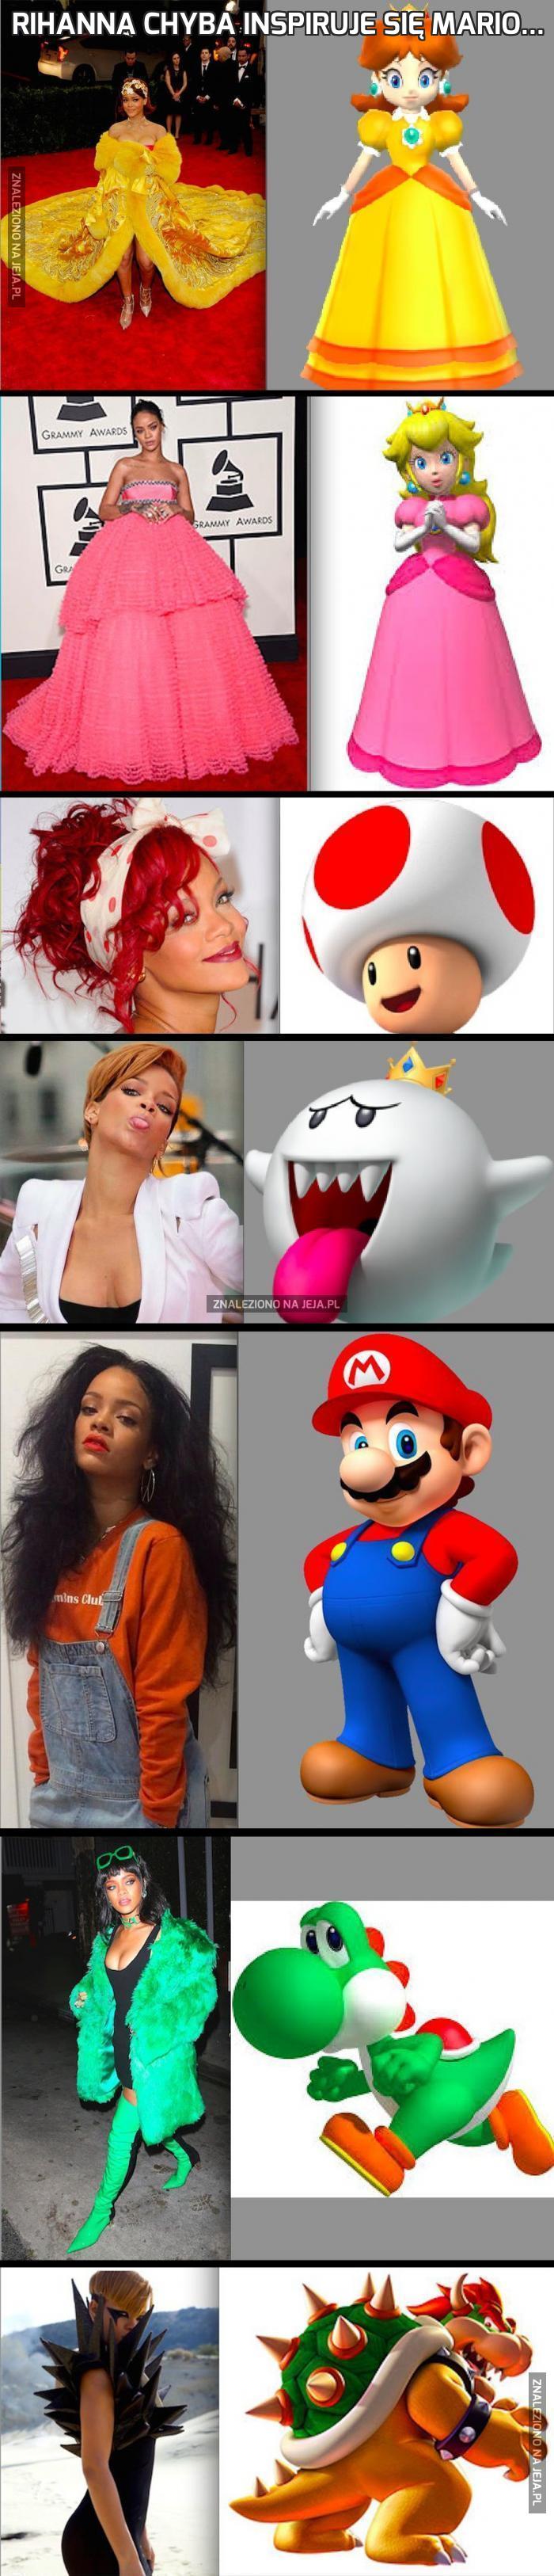 Rihanna chyba inspiruje się Mario...